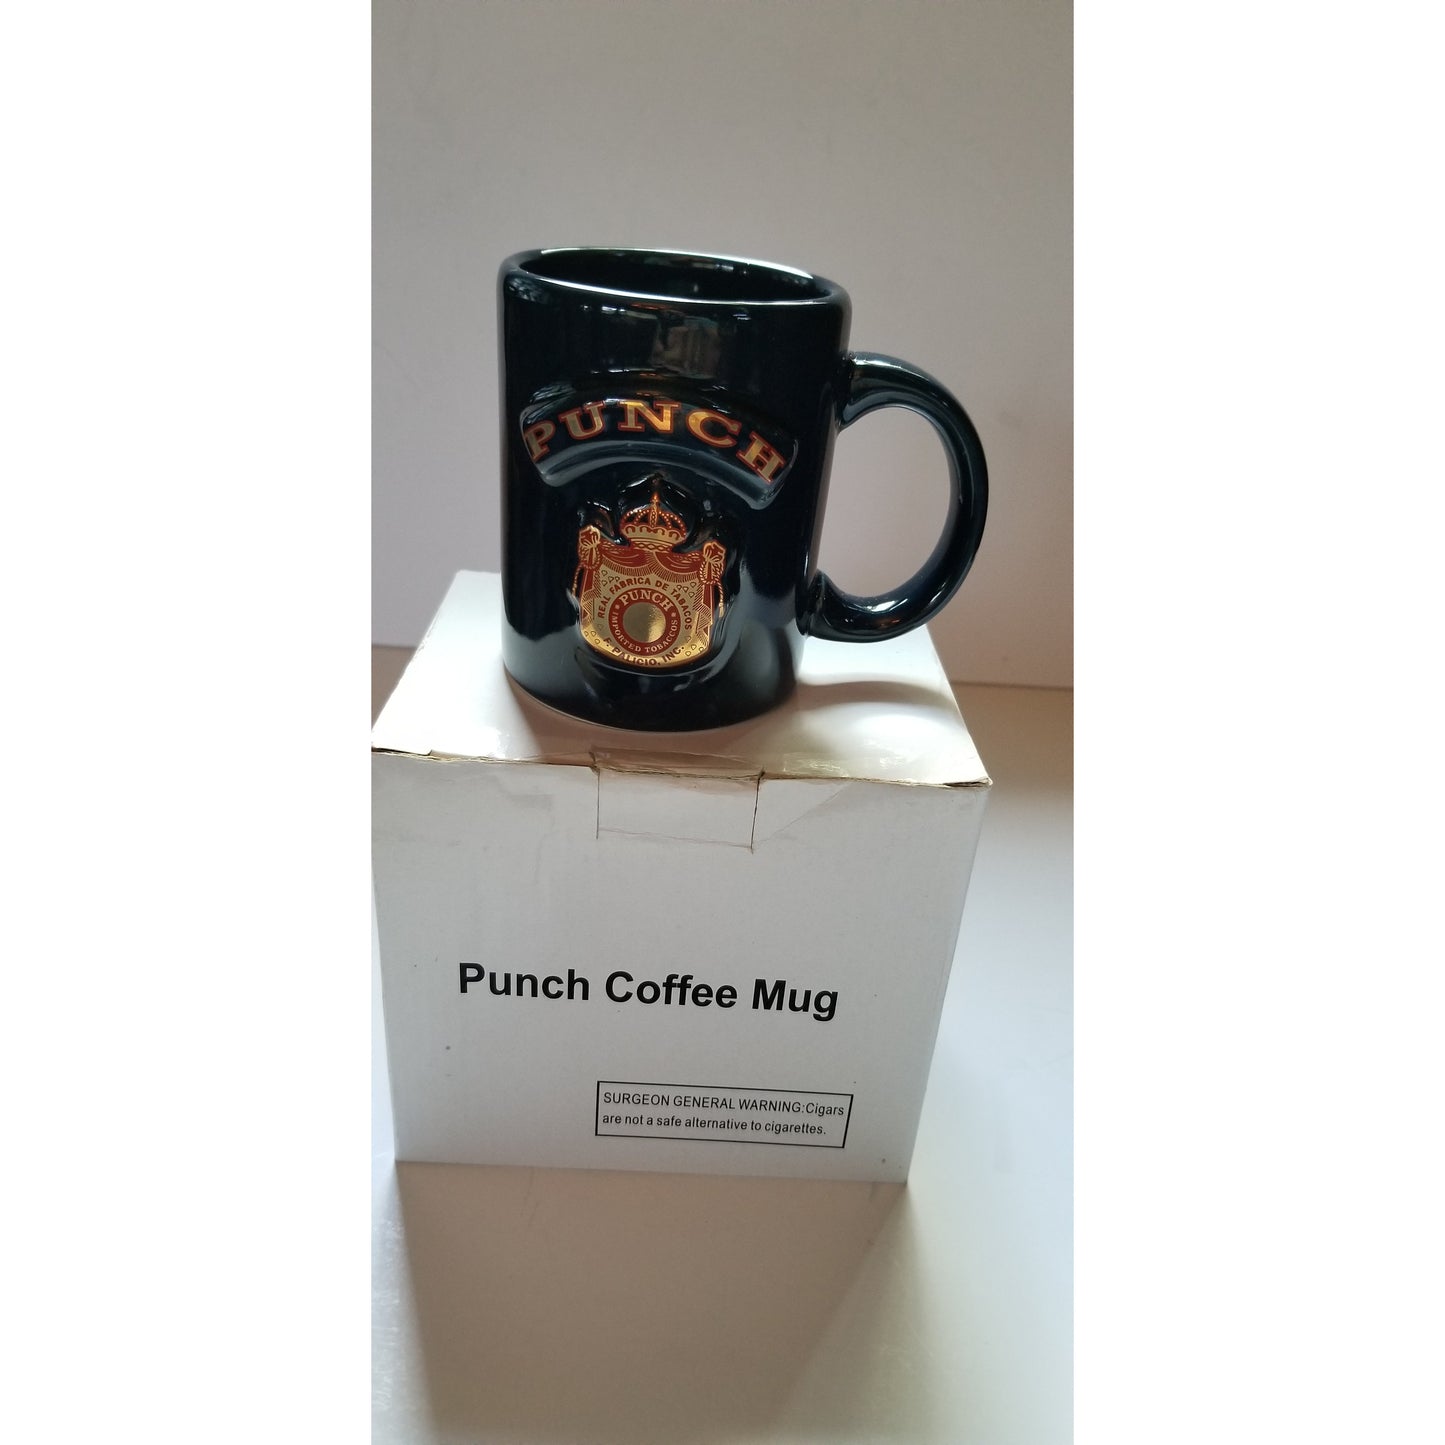 Punch coffee mug